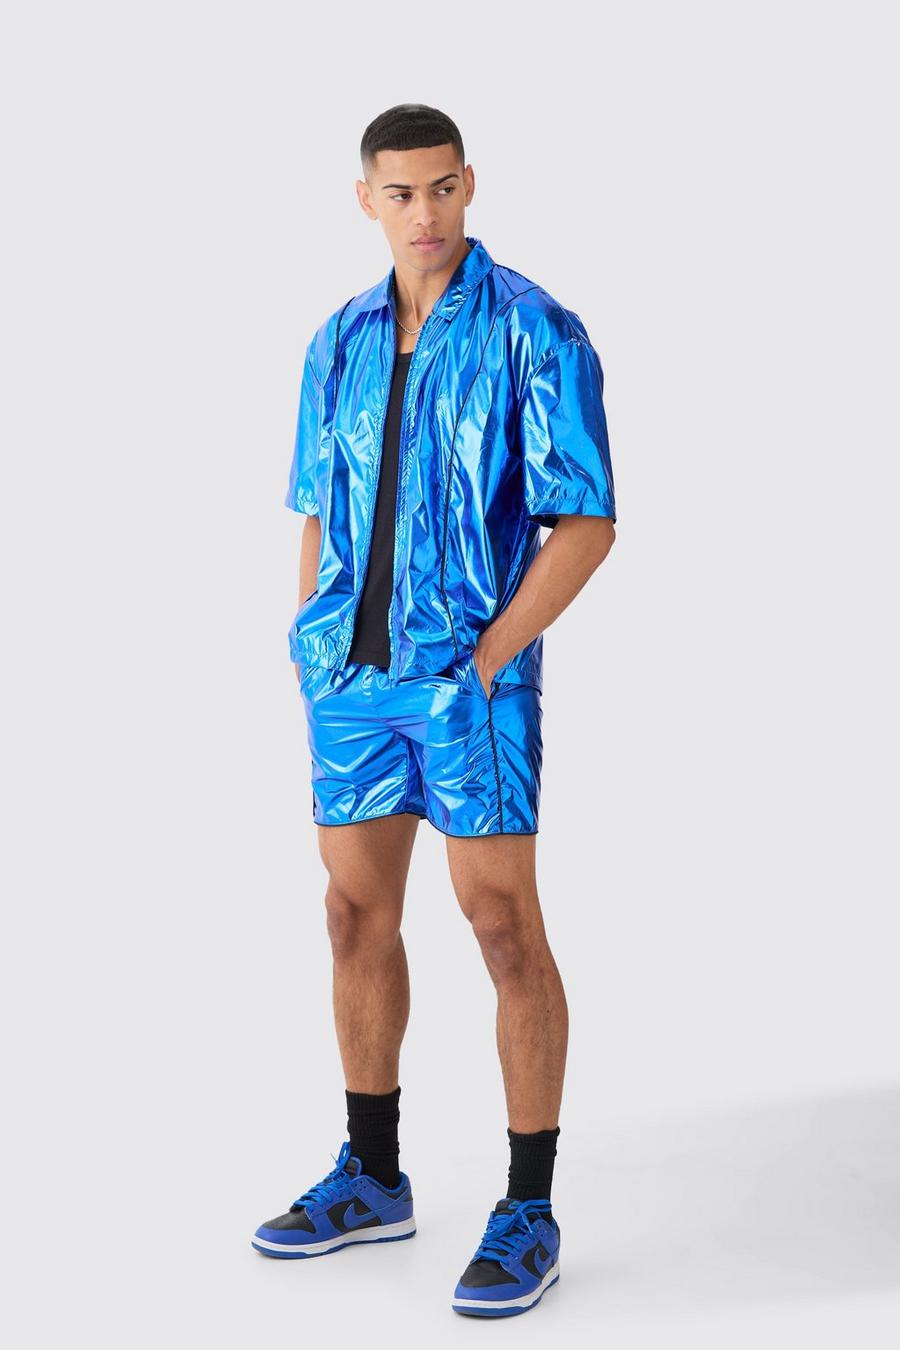 Kastiges Oversize Hemd und Shorts in Metallic-Optik, Blue